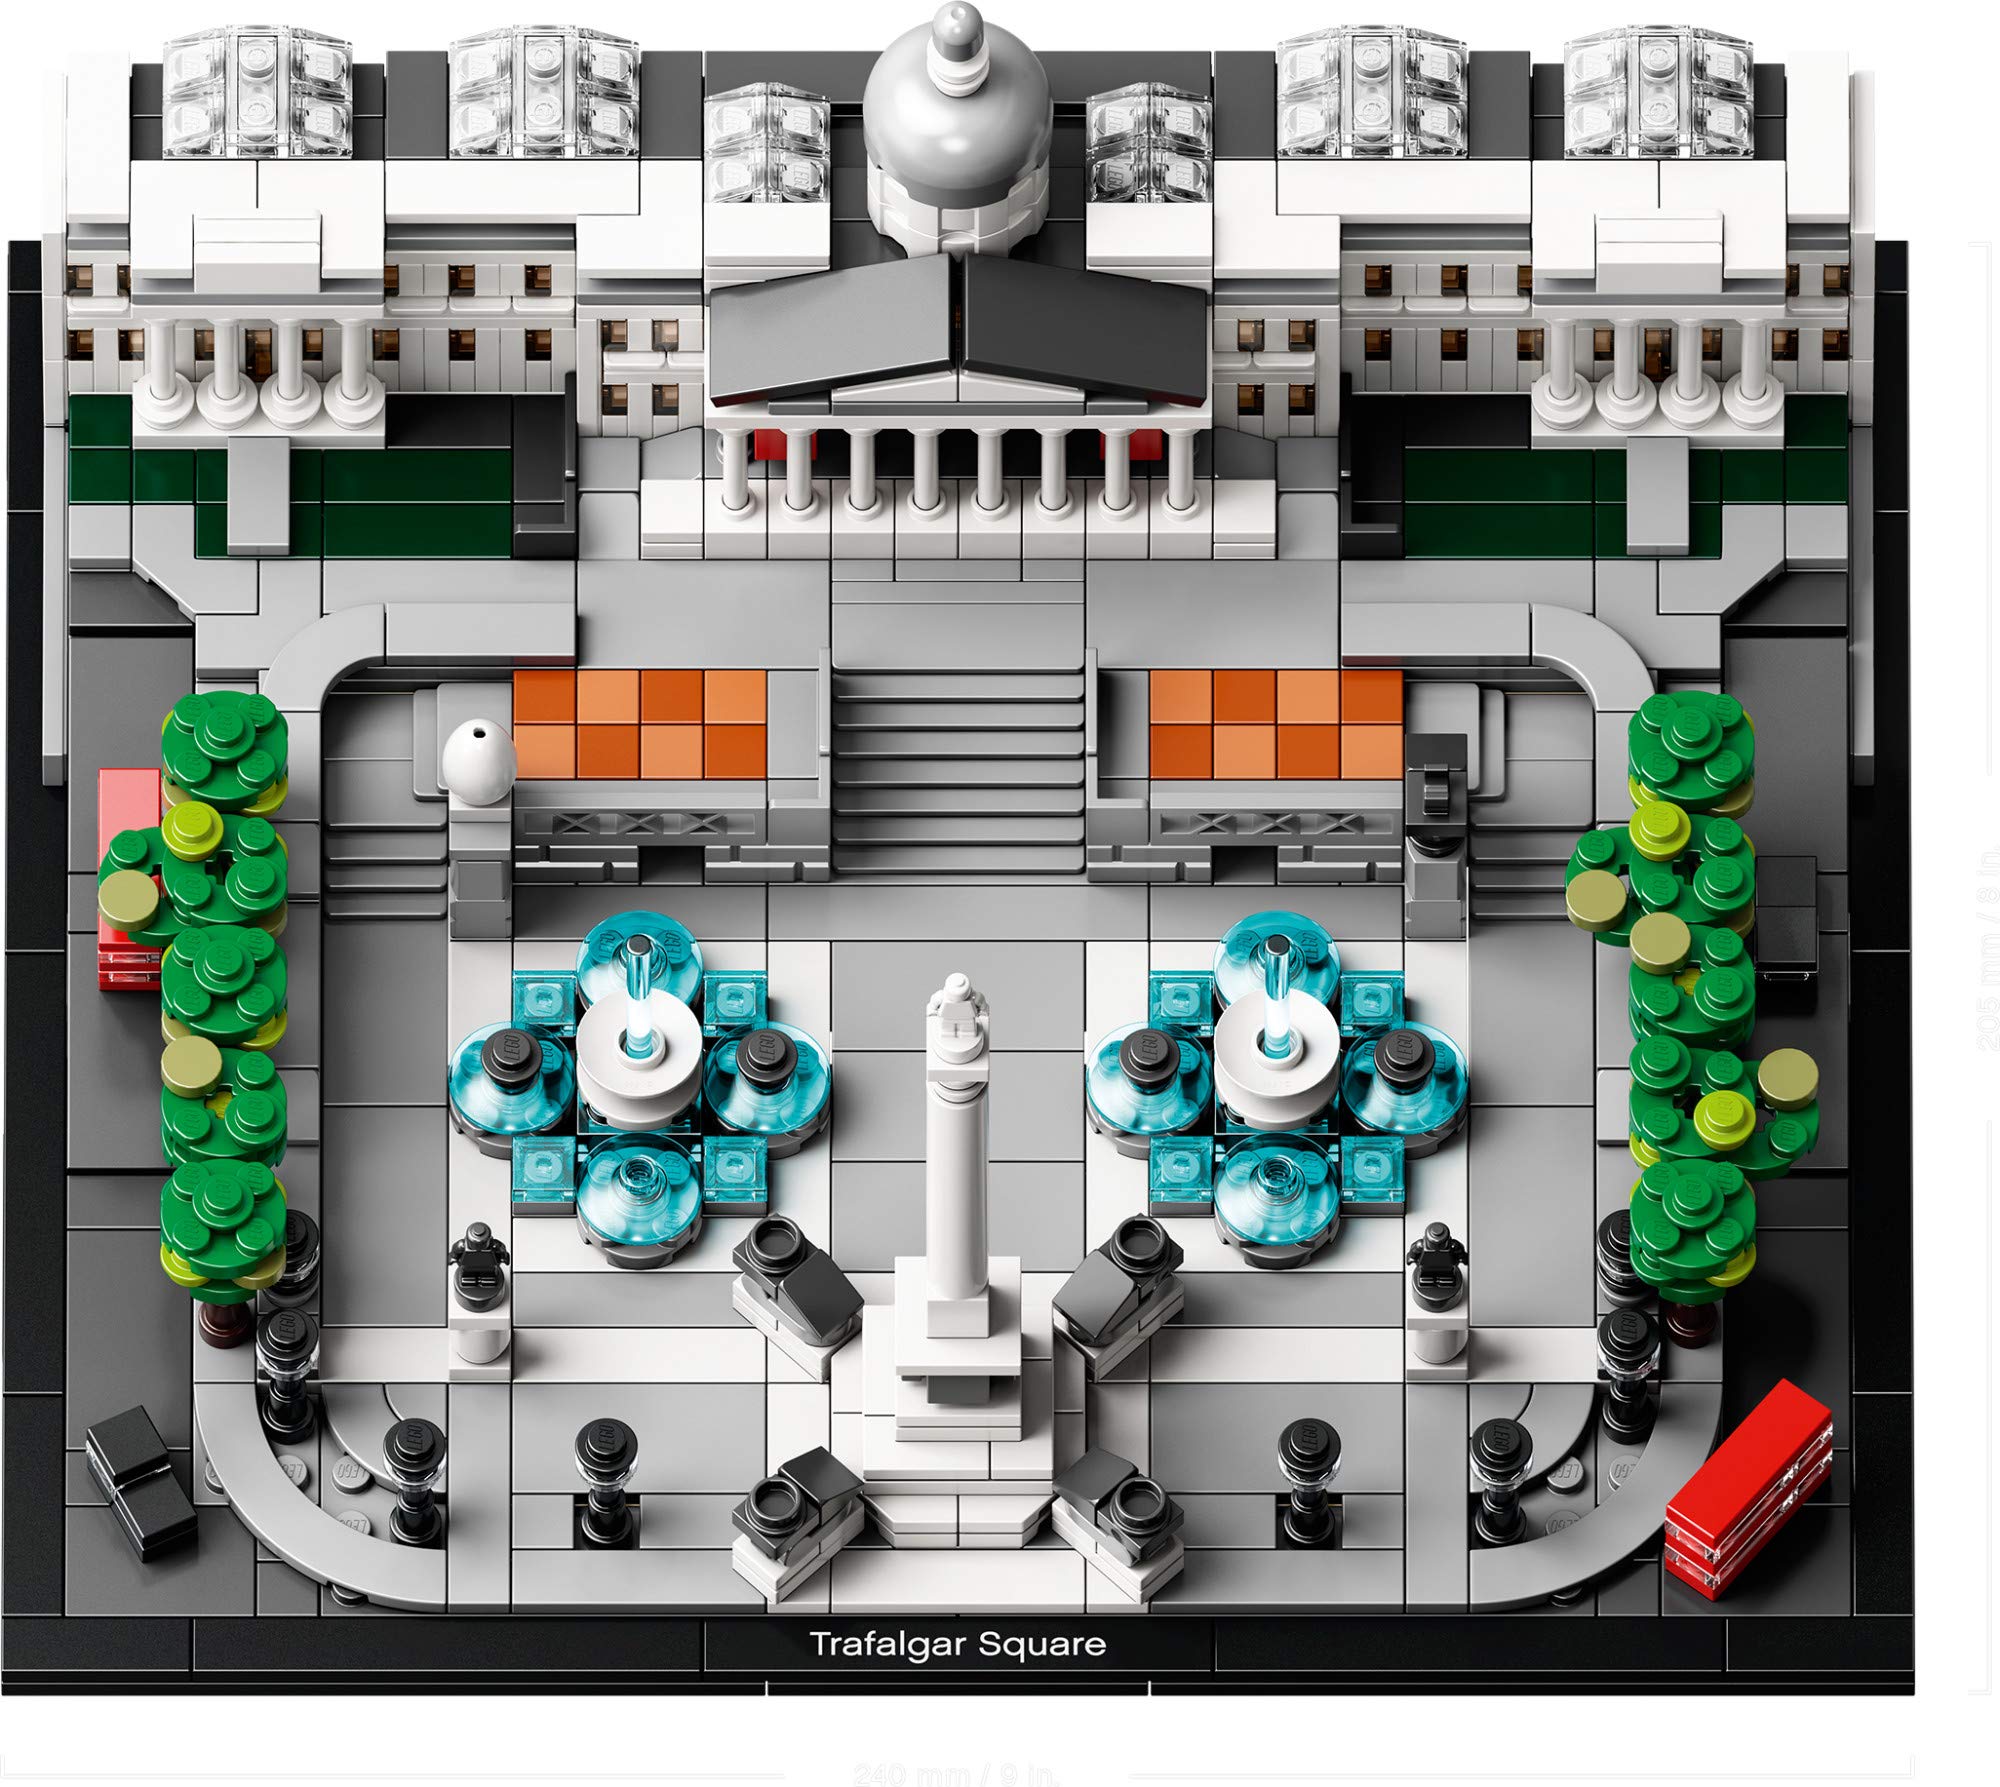 LEGO Architecture 21045 Trafalgar Square Building Kit, New 2019 (1197 Pieces) (Like New, Open Box)